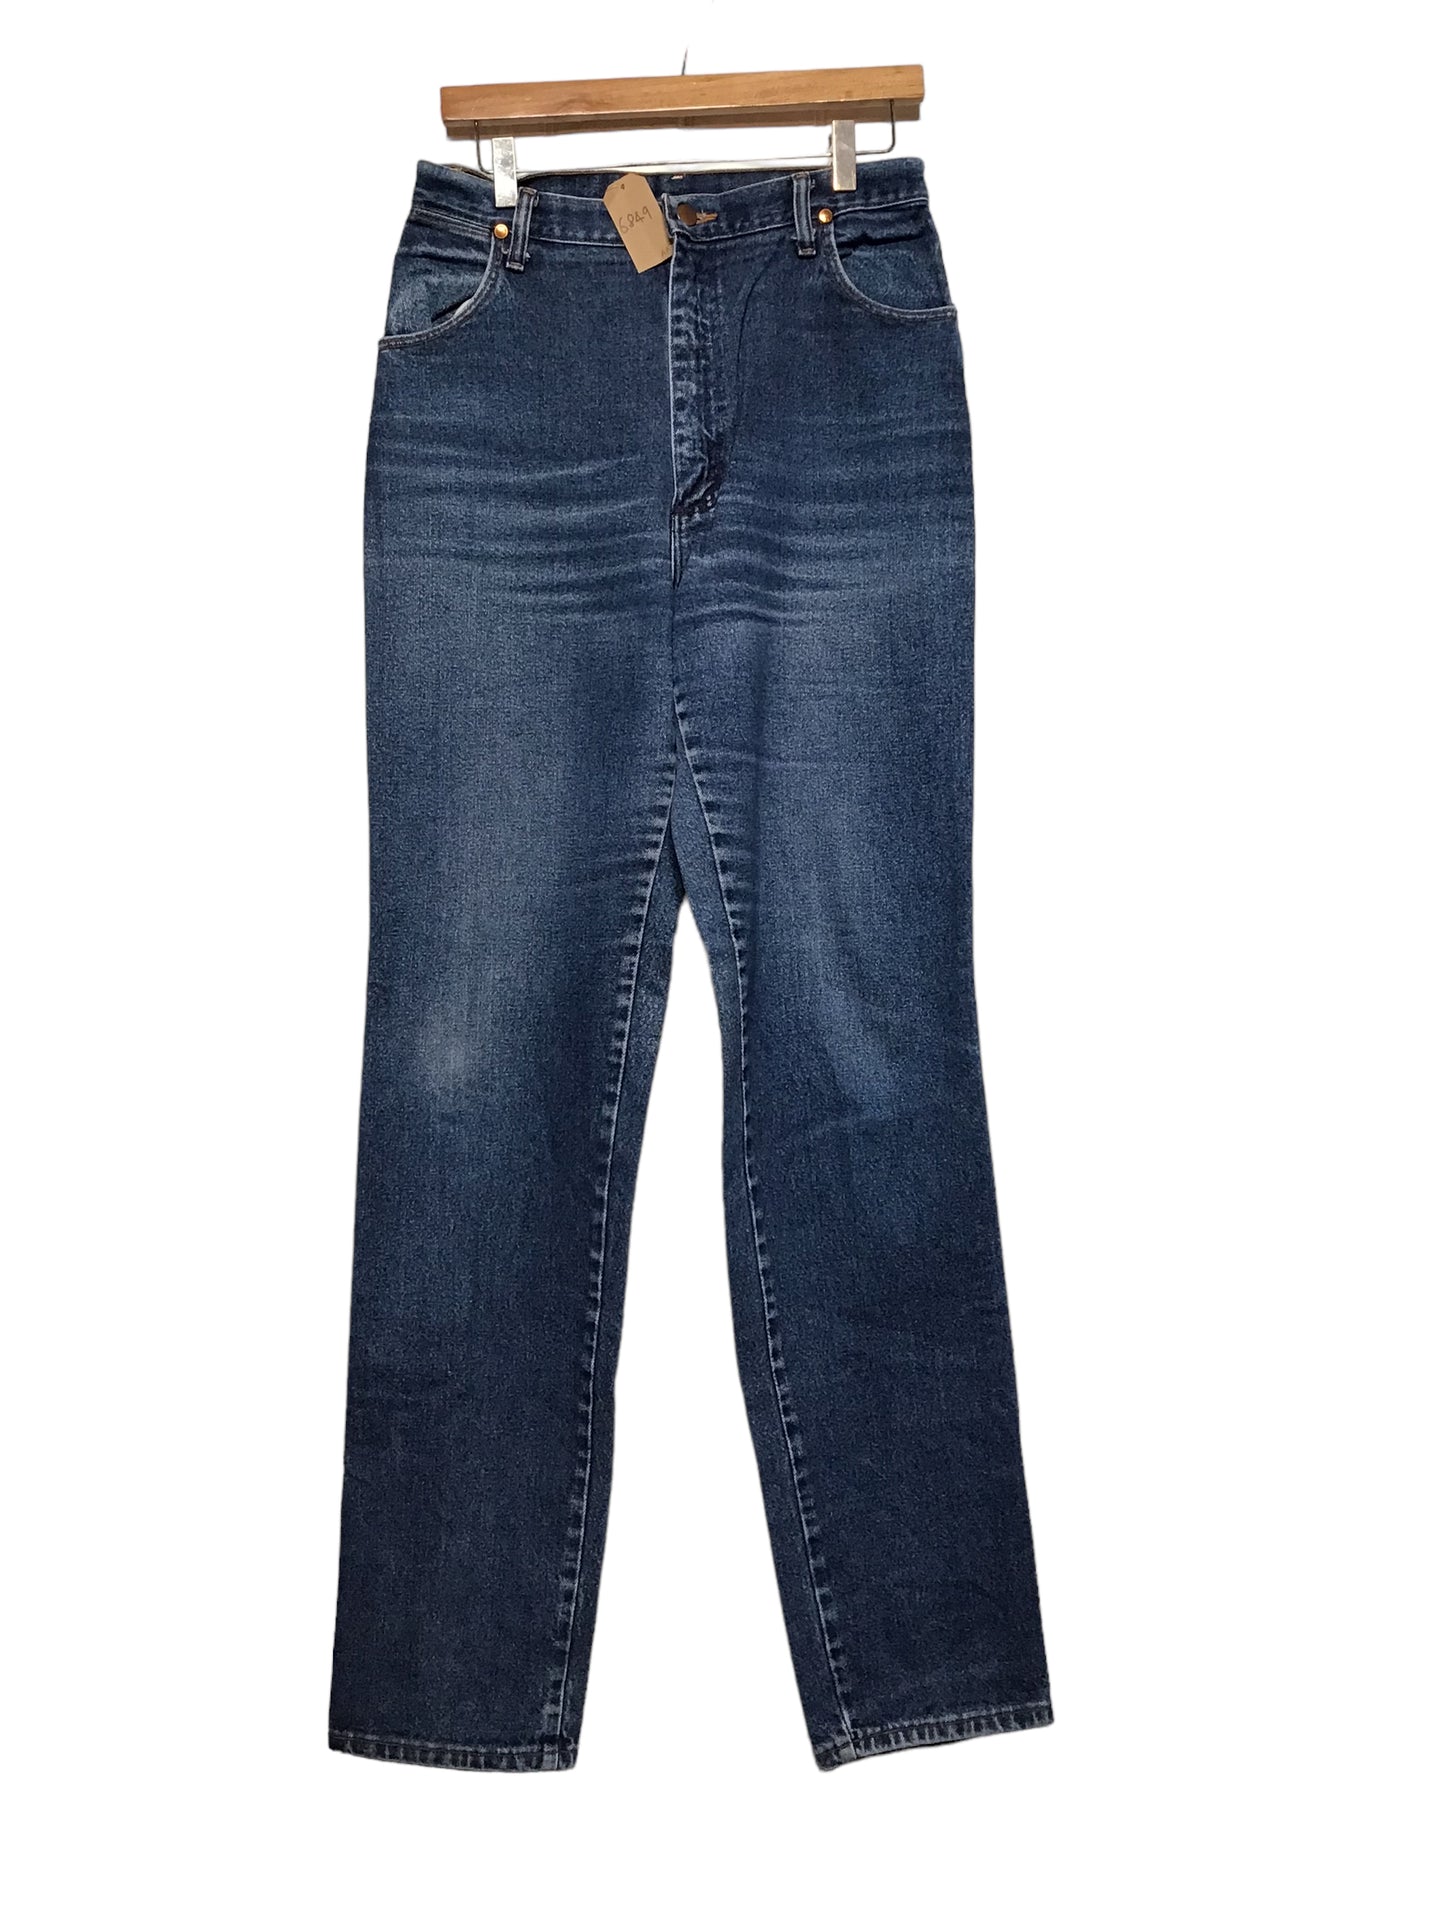 Wrangler Jeans (30x35)